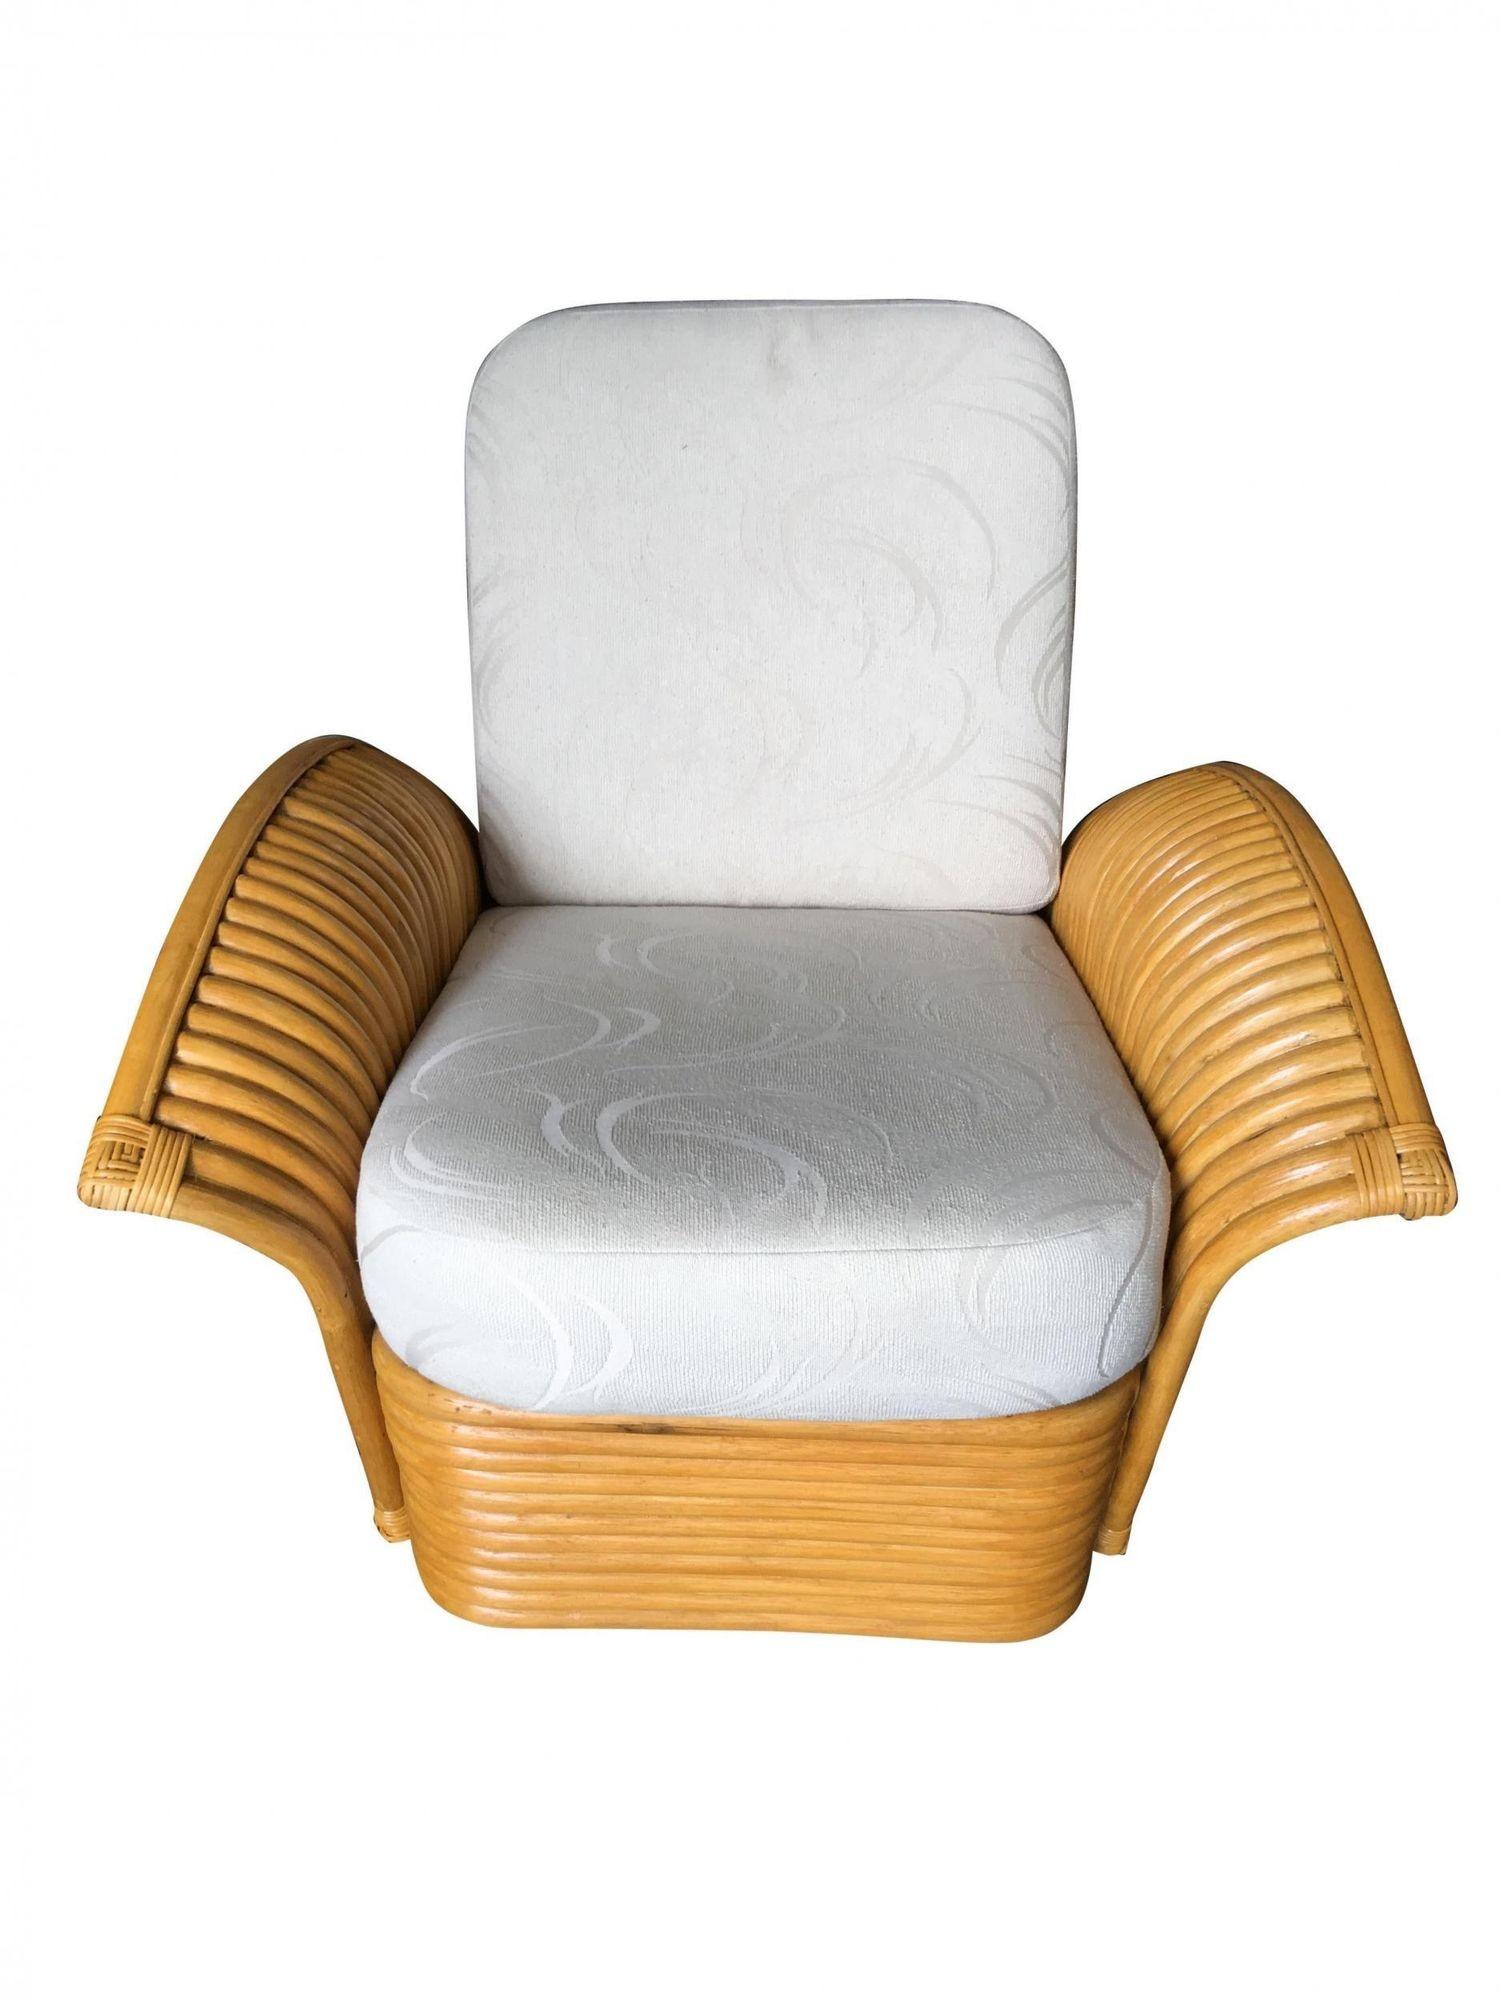 American Restored Art Deco Rattan Fan Arm Lounge Chair Pair